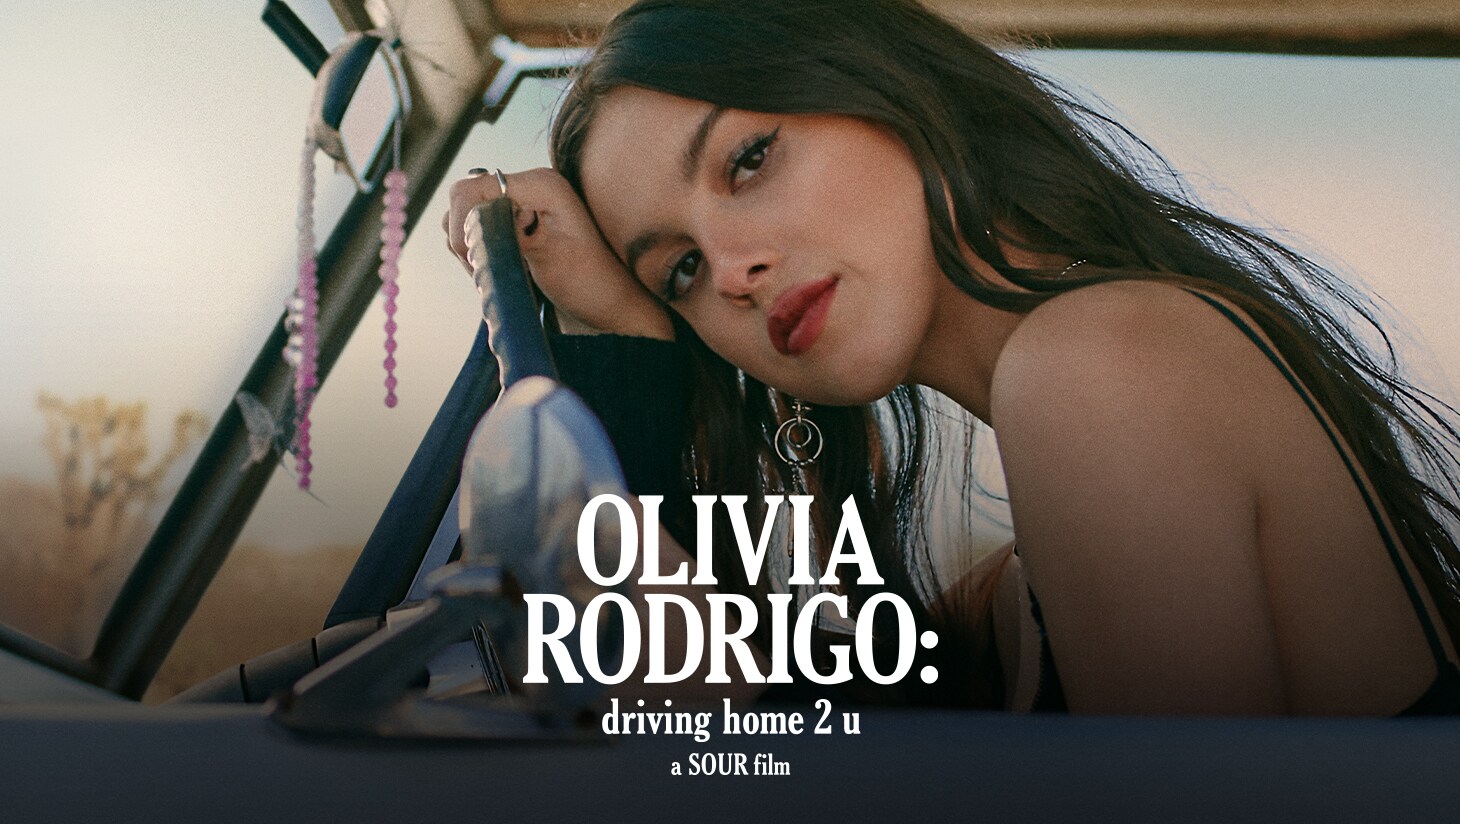 Olivia Rodrigo, driving home 2 u